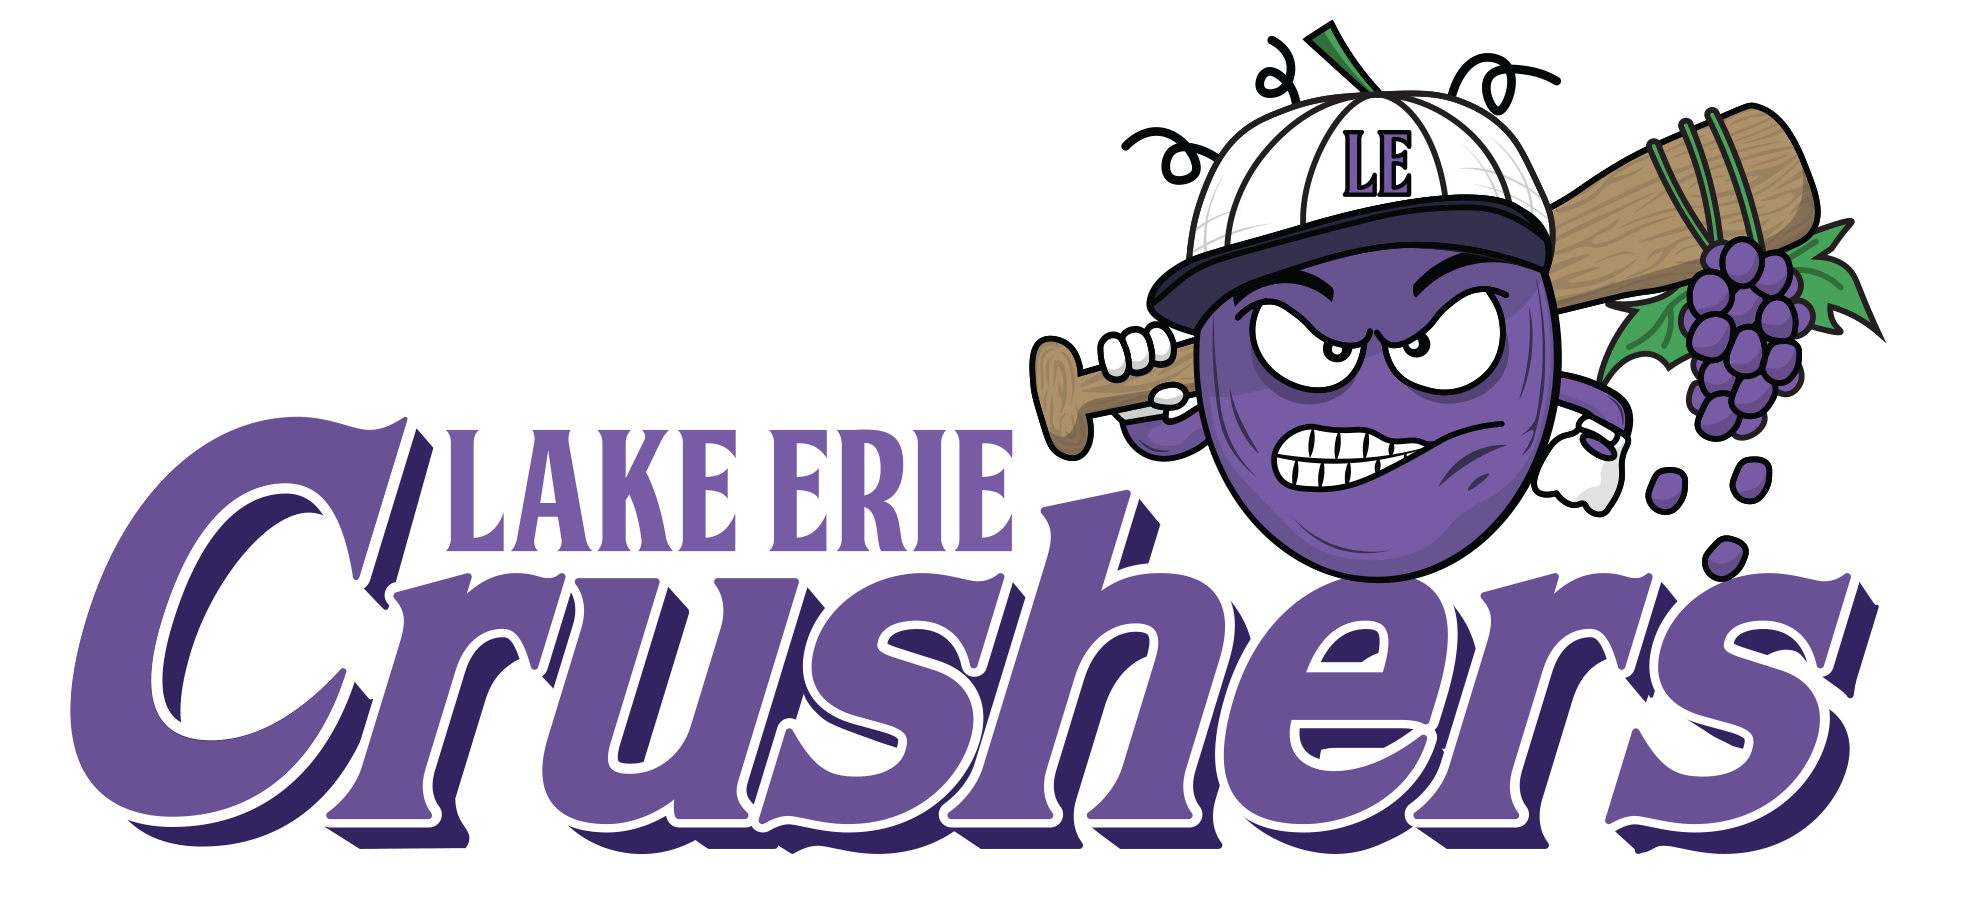 Crushers Logo - Lake Erie Crushers Unveil New Logo | Ballpark Digest